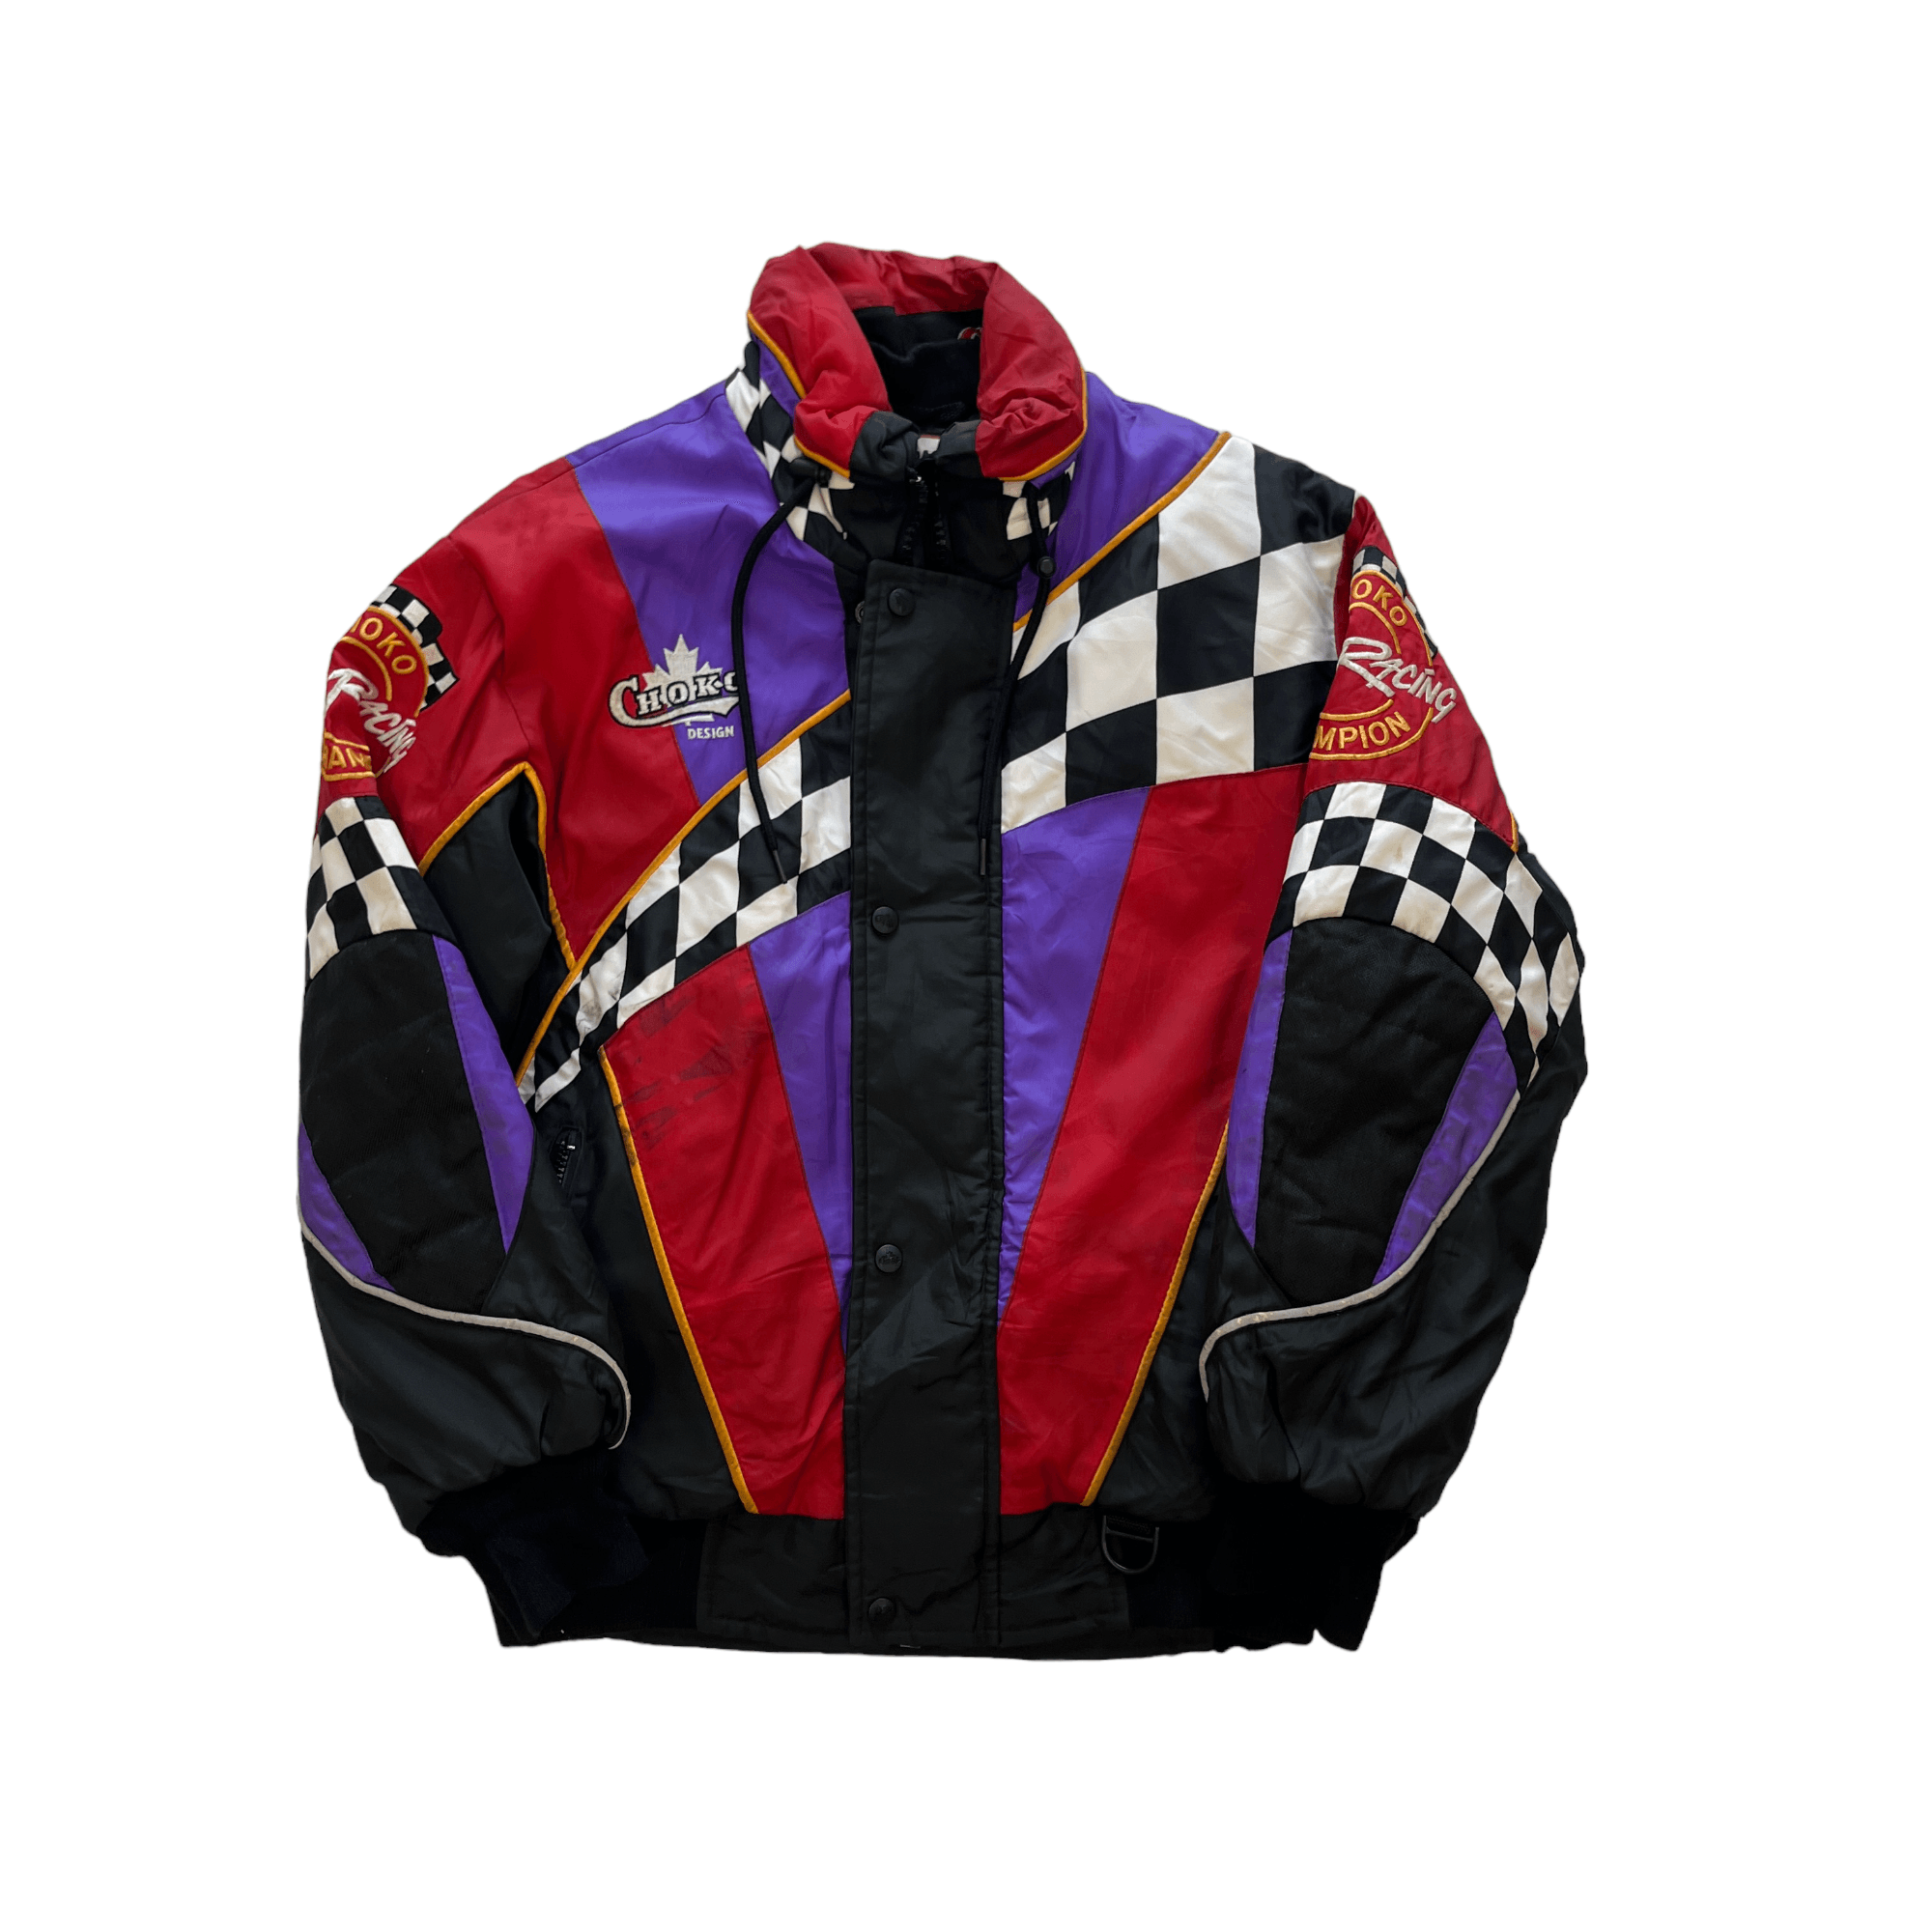 Vintage 90s Black, Red + Purple Pro Racing Jacket - Small